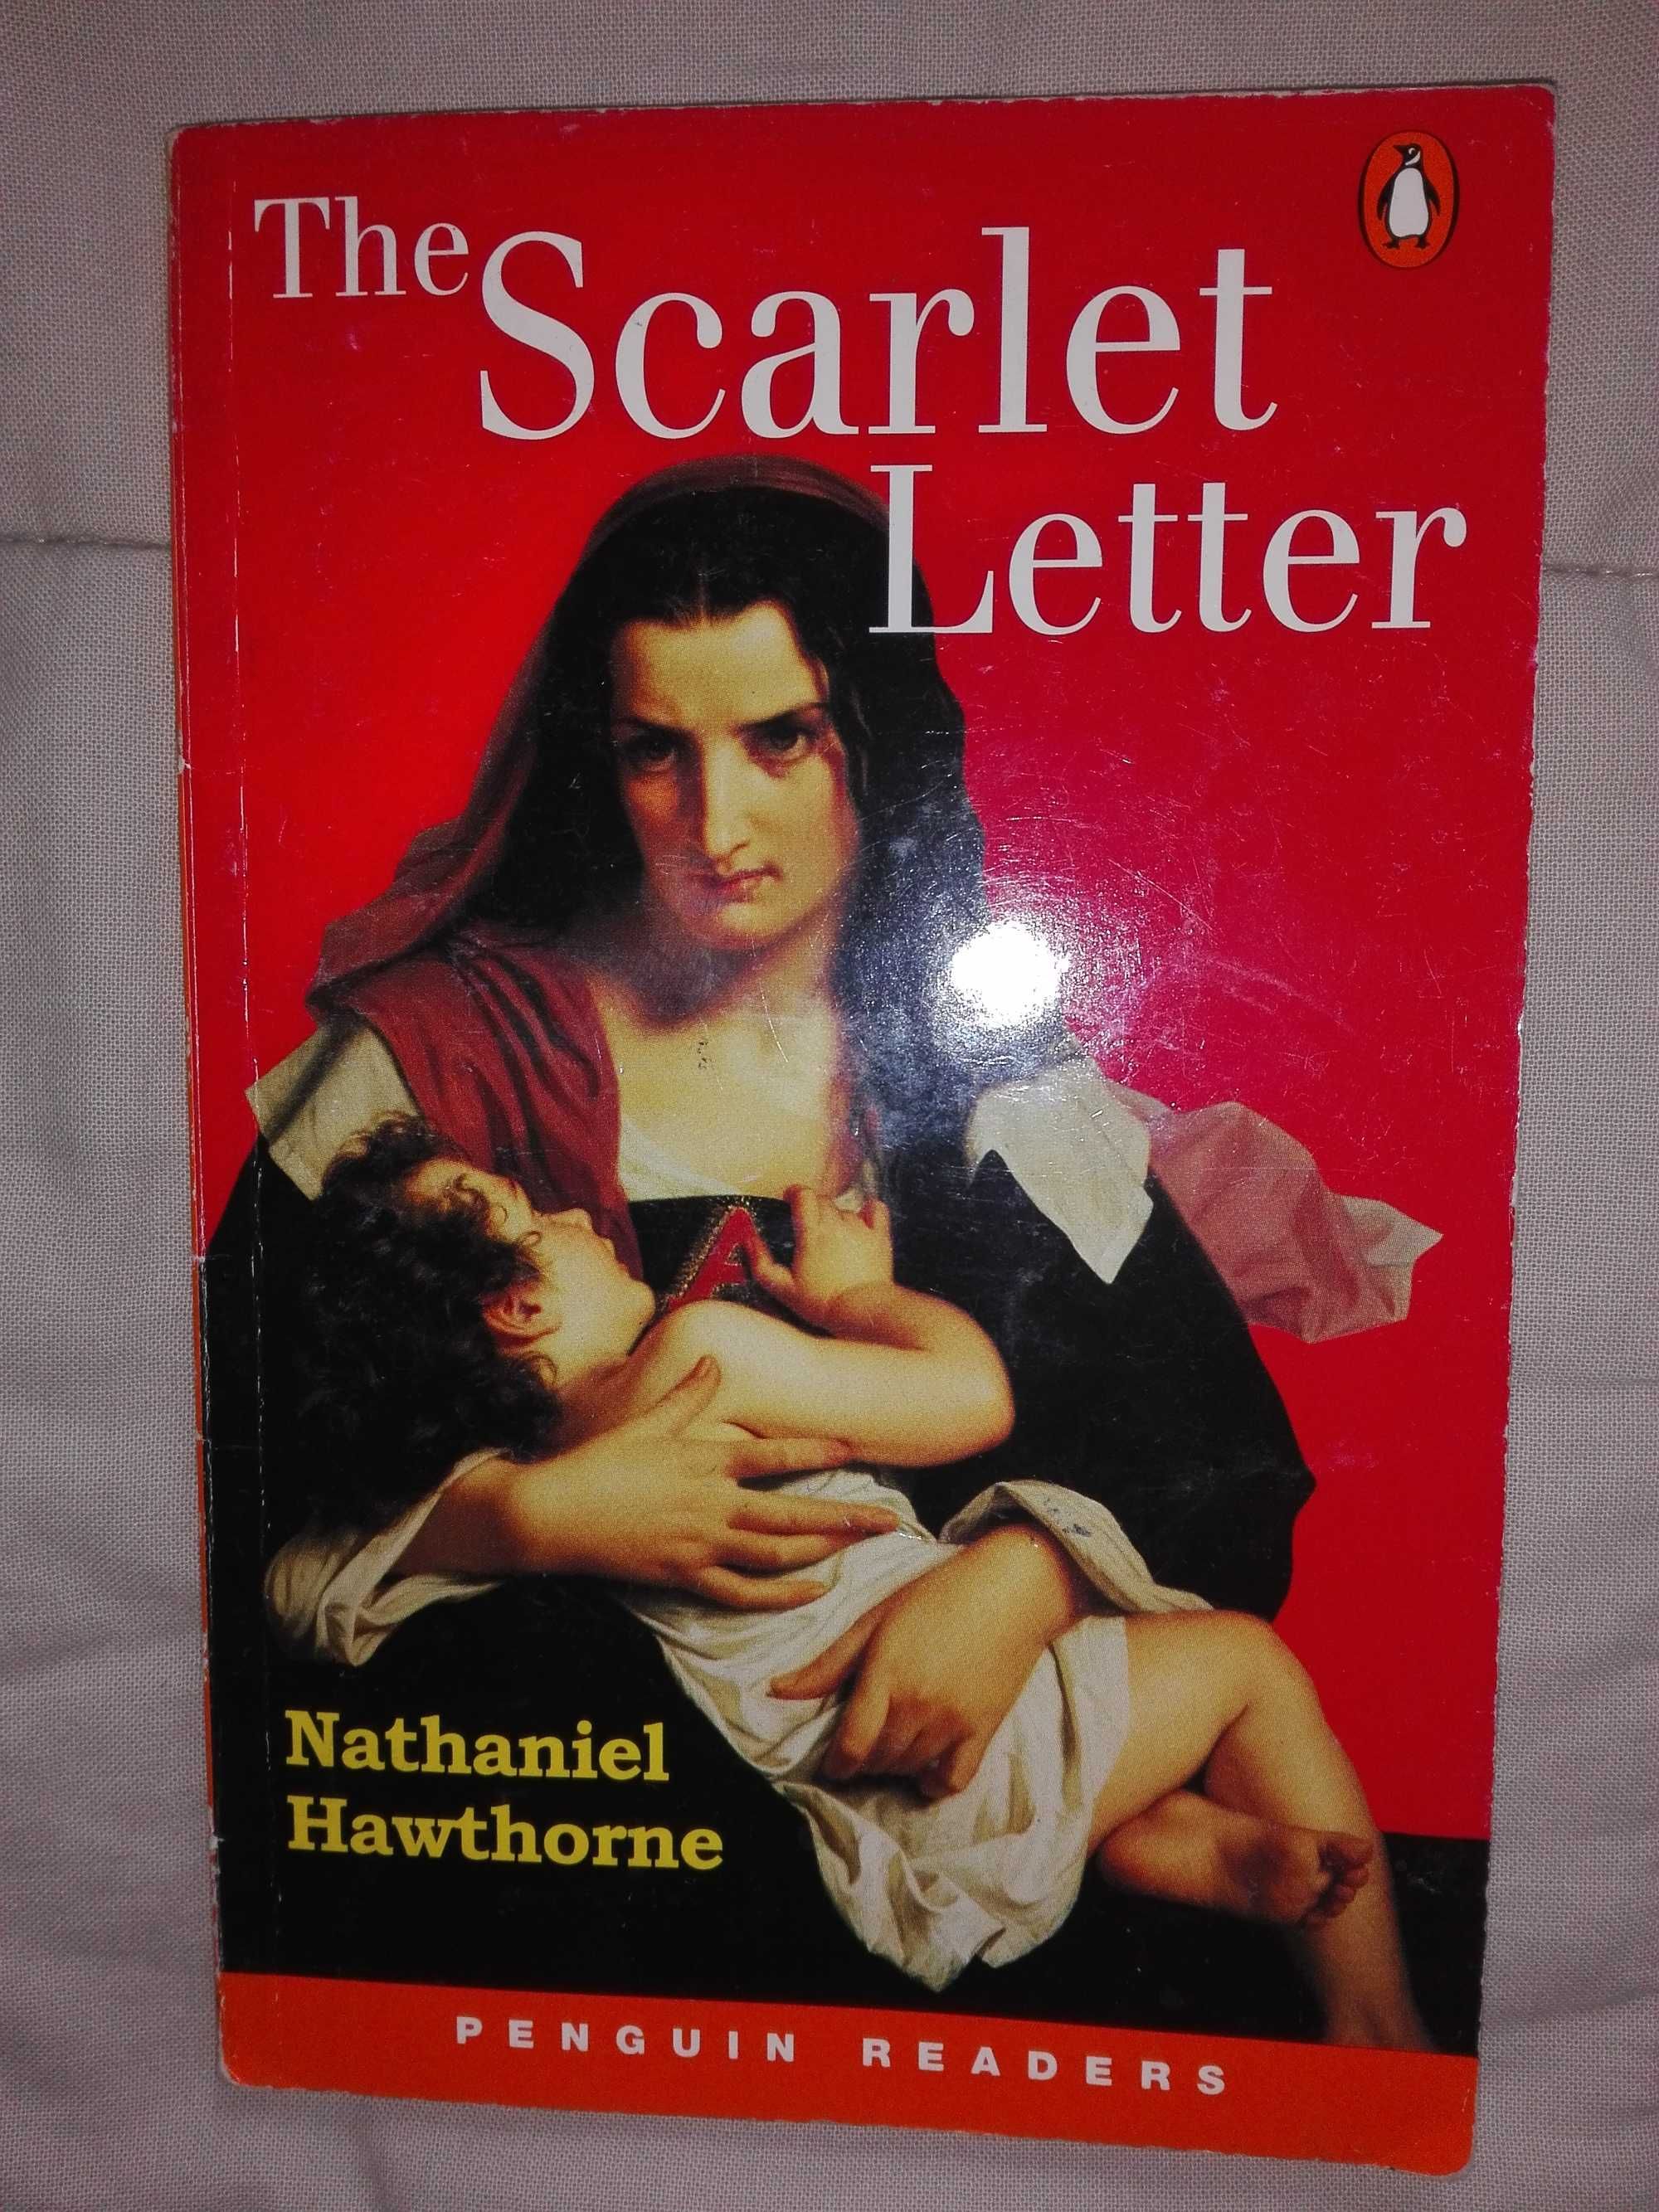 Penguin Readers - The Scarlet Letter, level 2